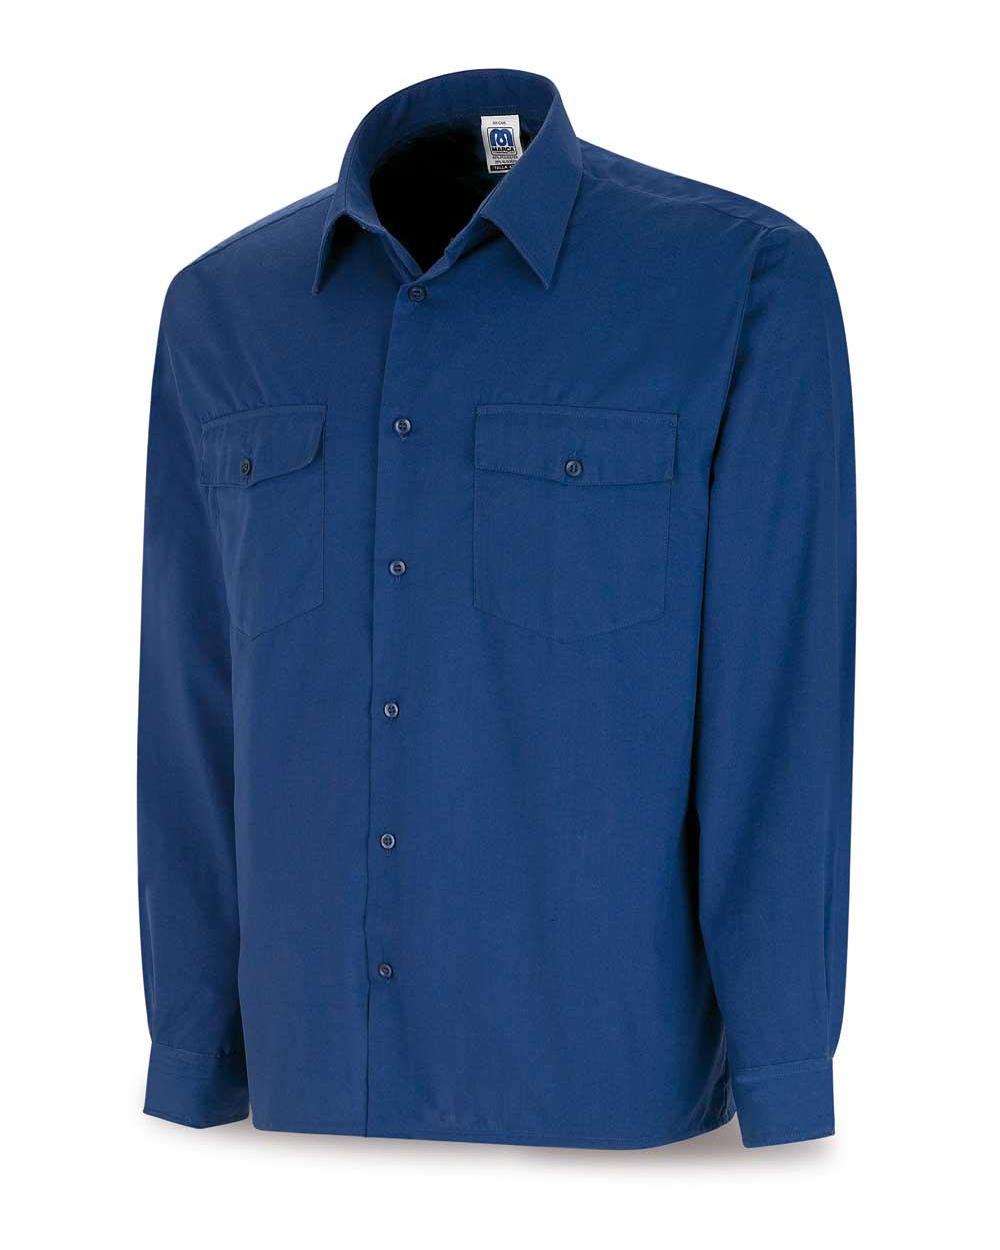 Comprar Camisa Algodón Azulina M/Larga 388-Cxml barato